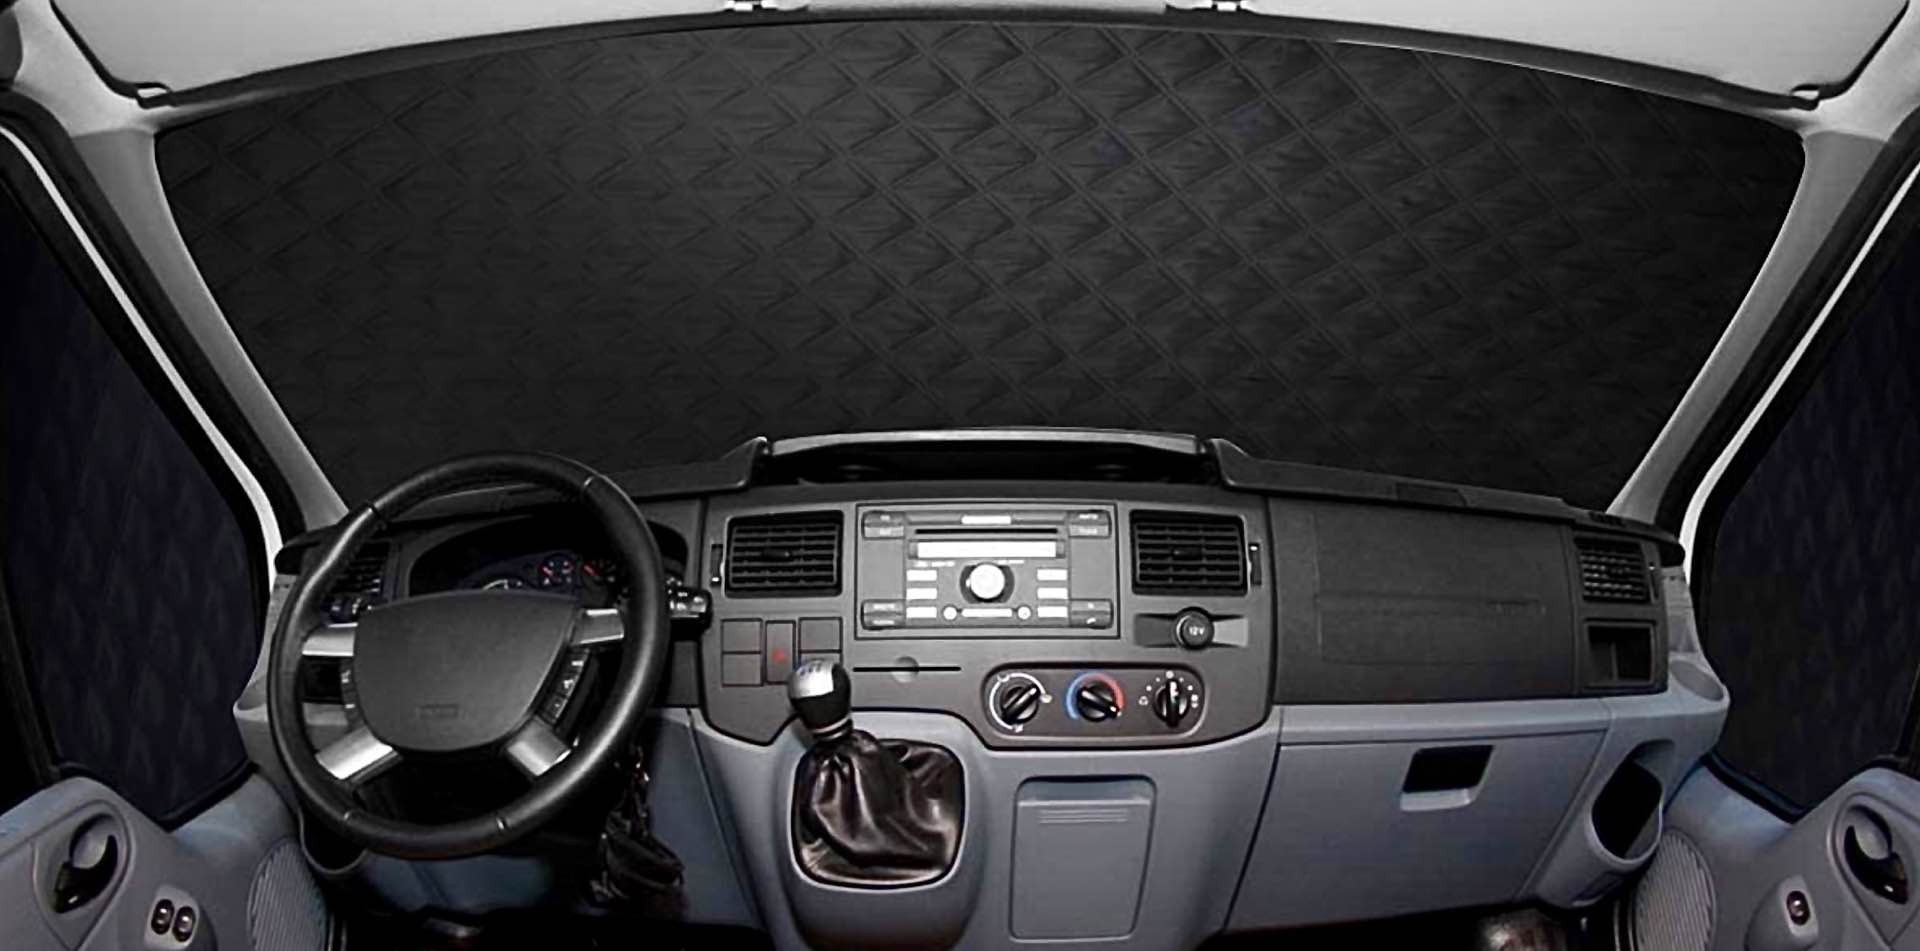 eluto-windshield-cover-for-ford-class-c-rvs-interior